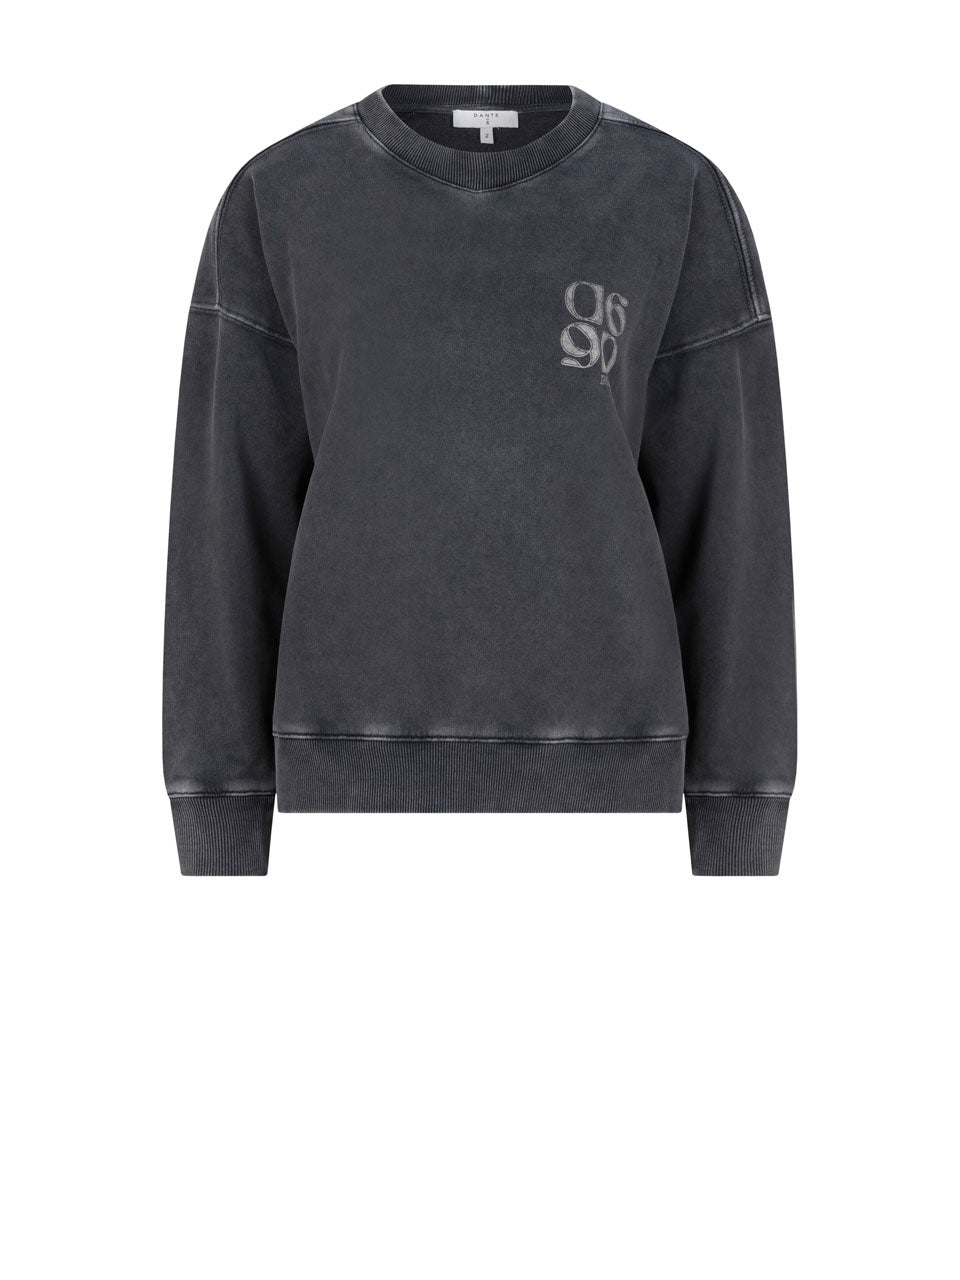 Dante 6 Logo Washed Black Sweater